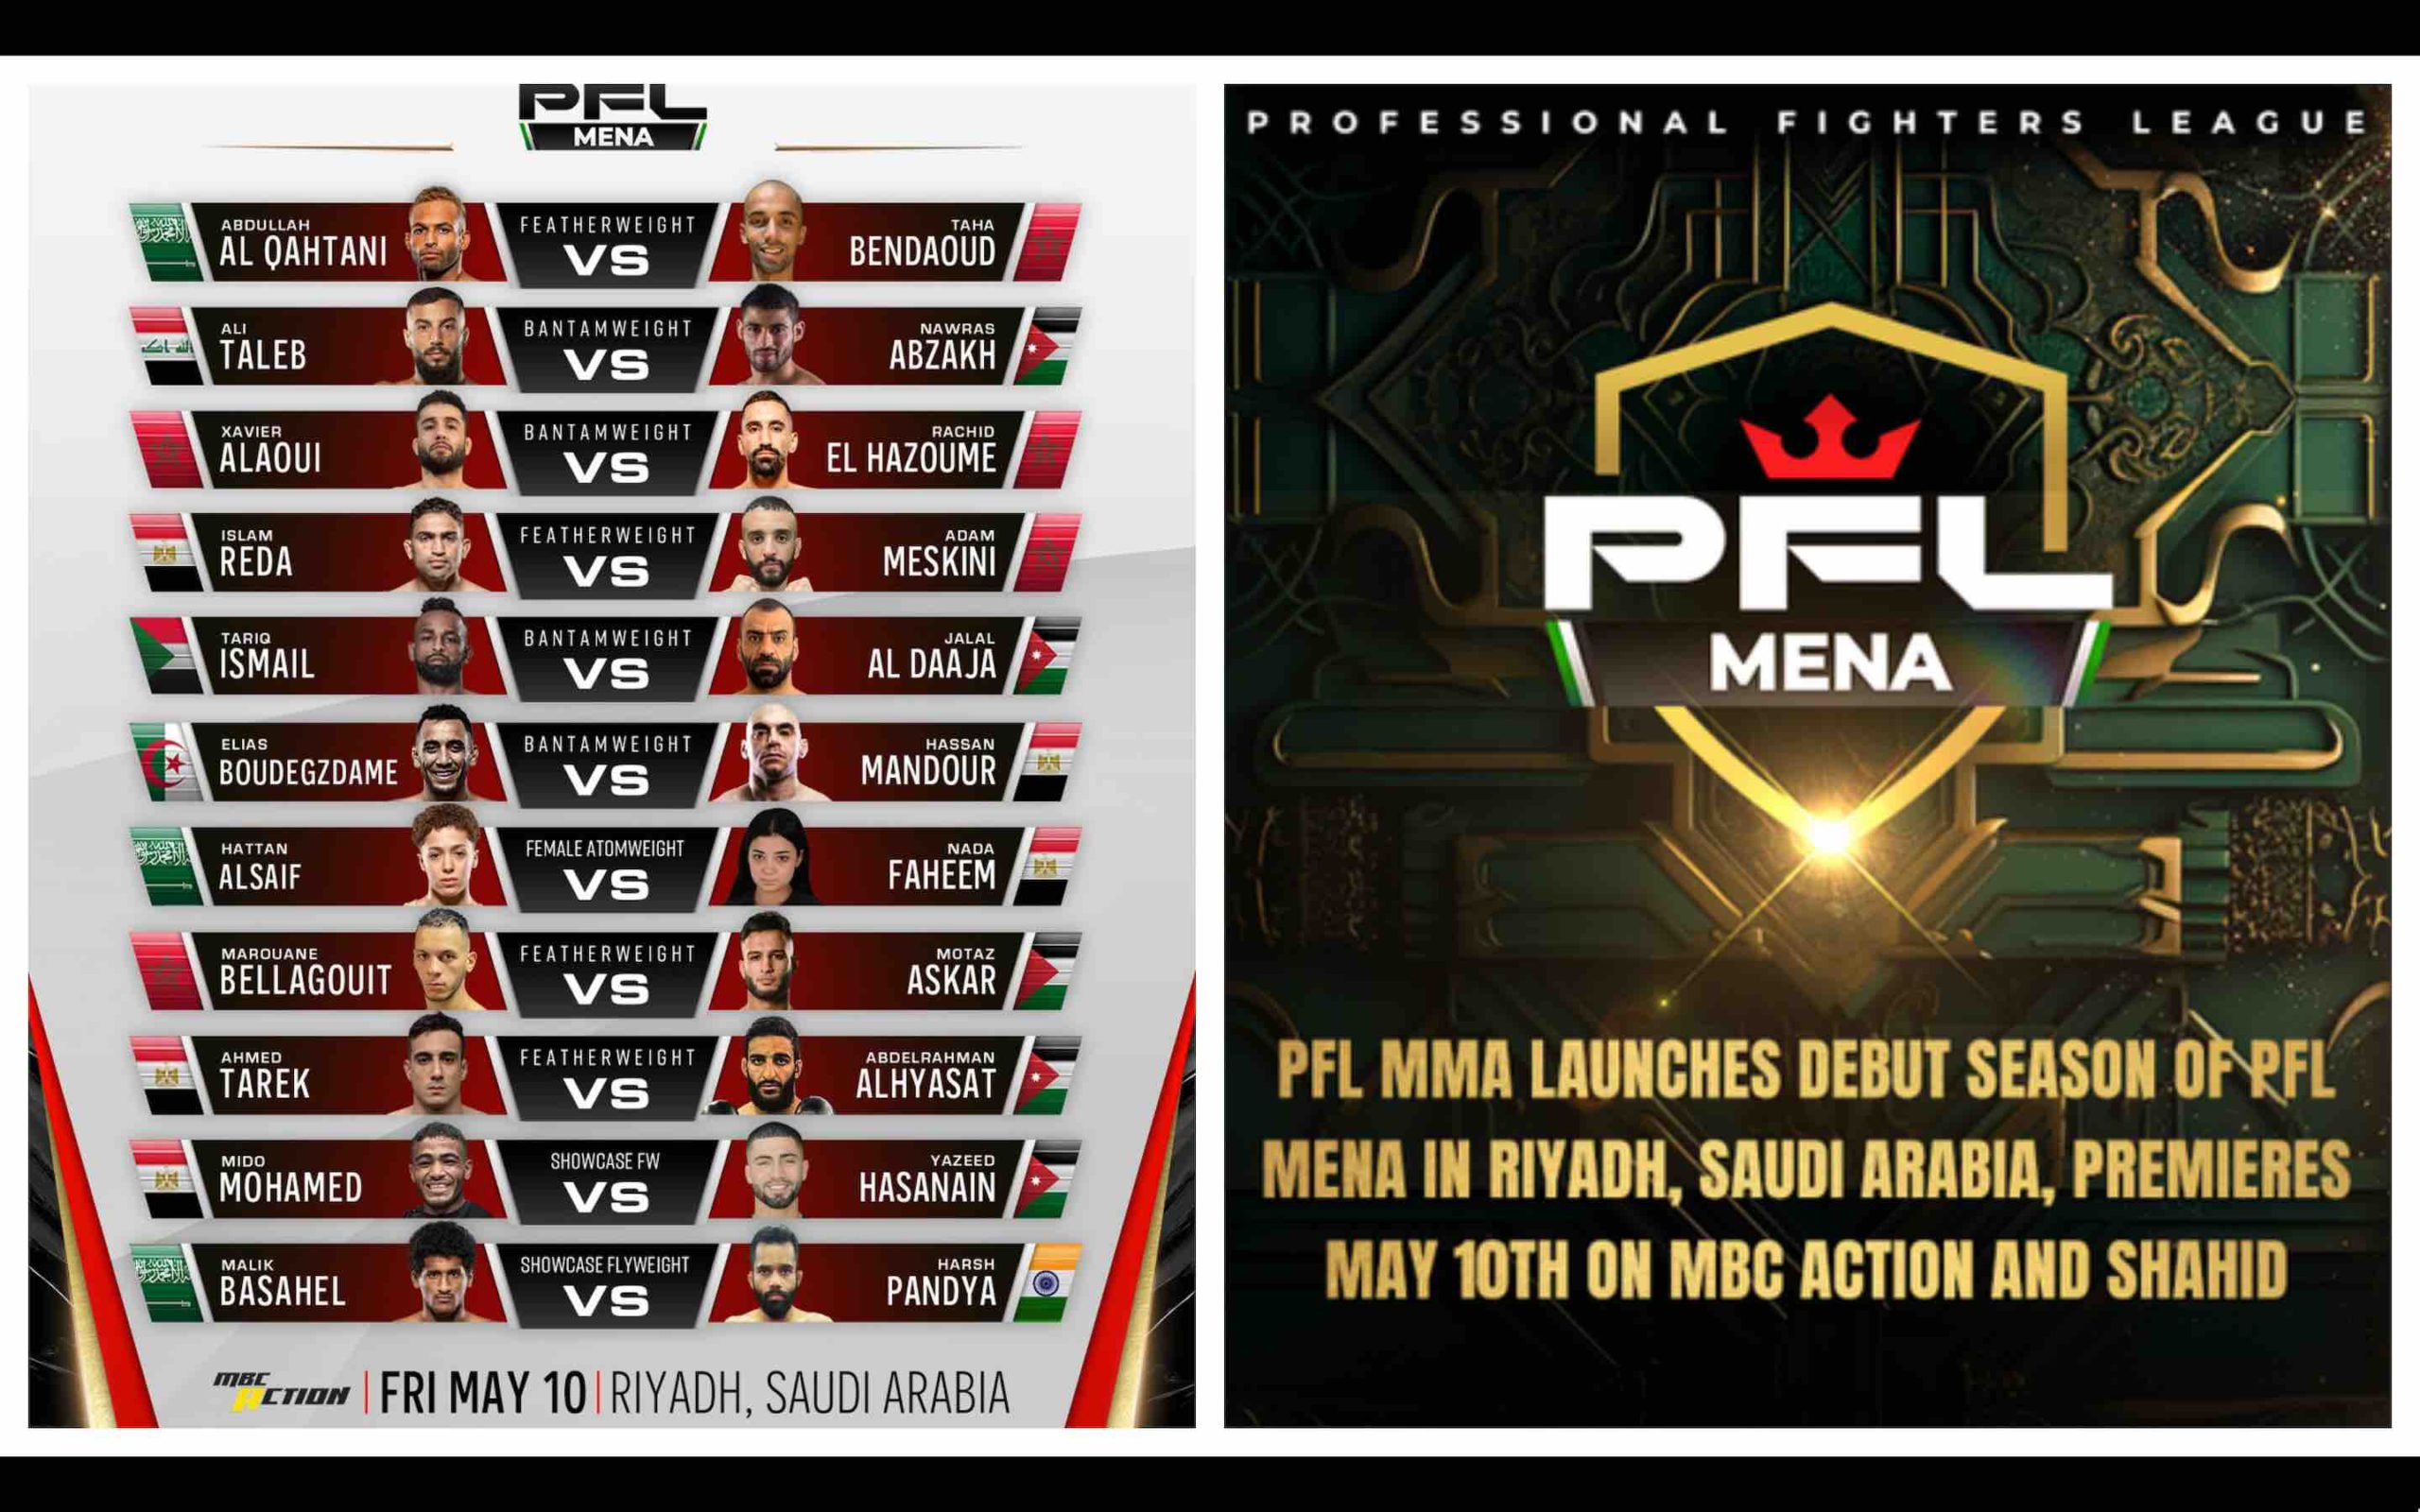 MENA's MMA league PFL Professional Fighters League